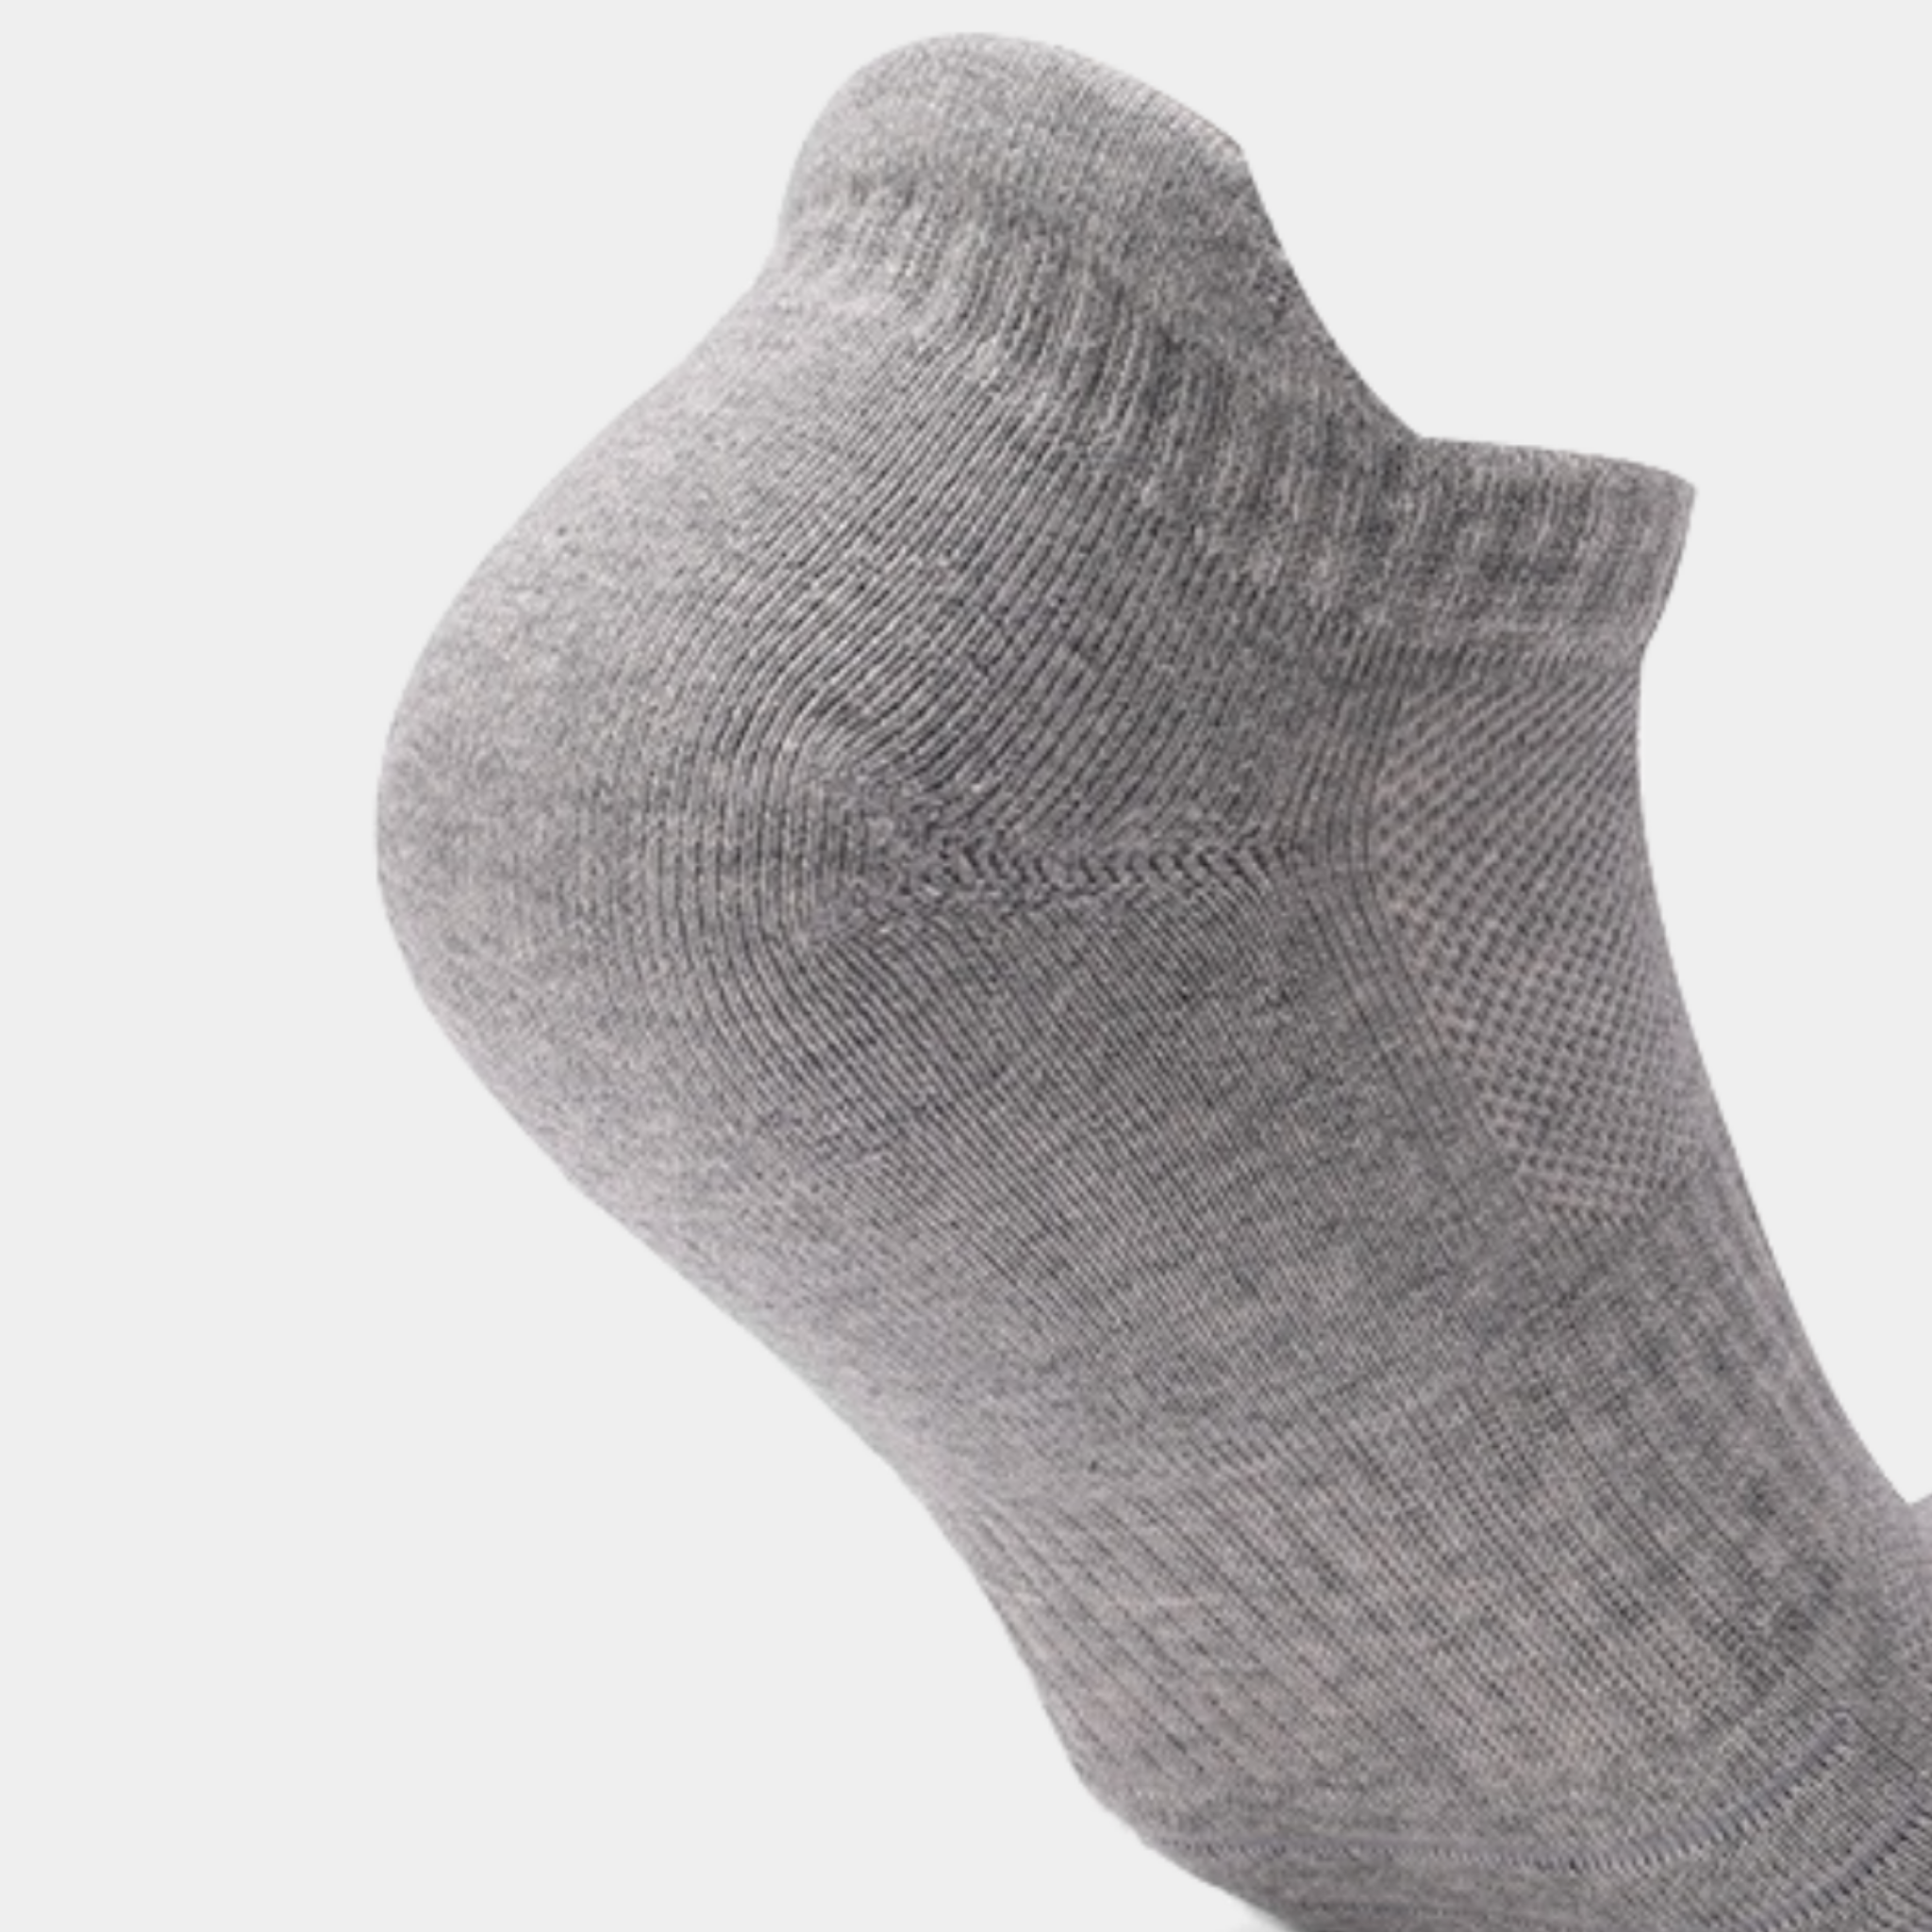 workout grip socks